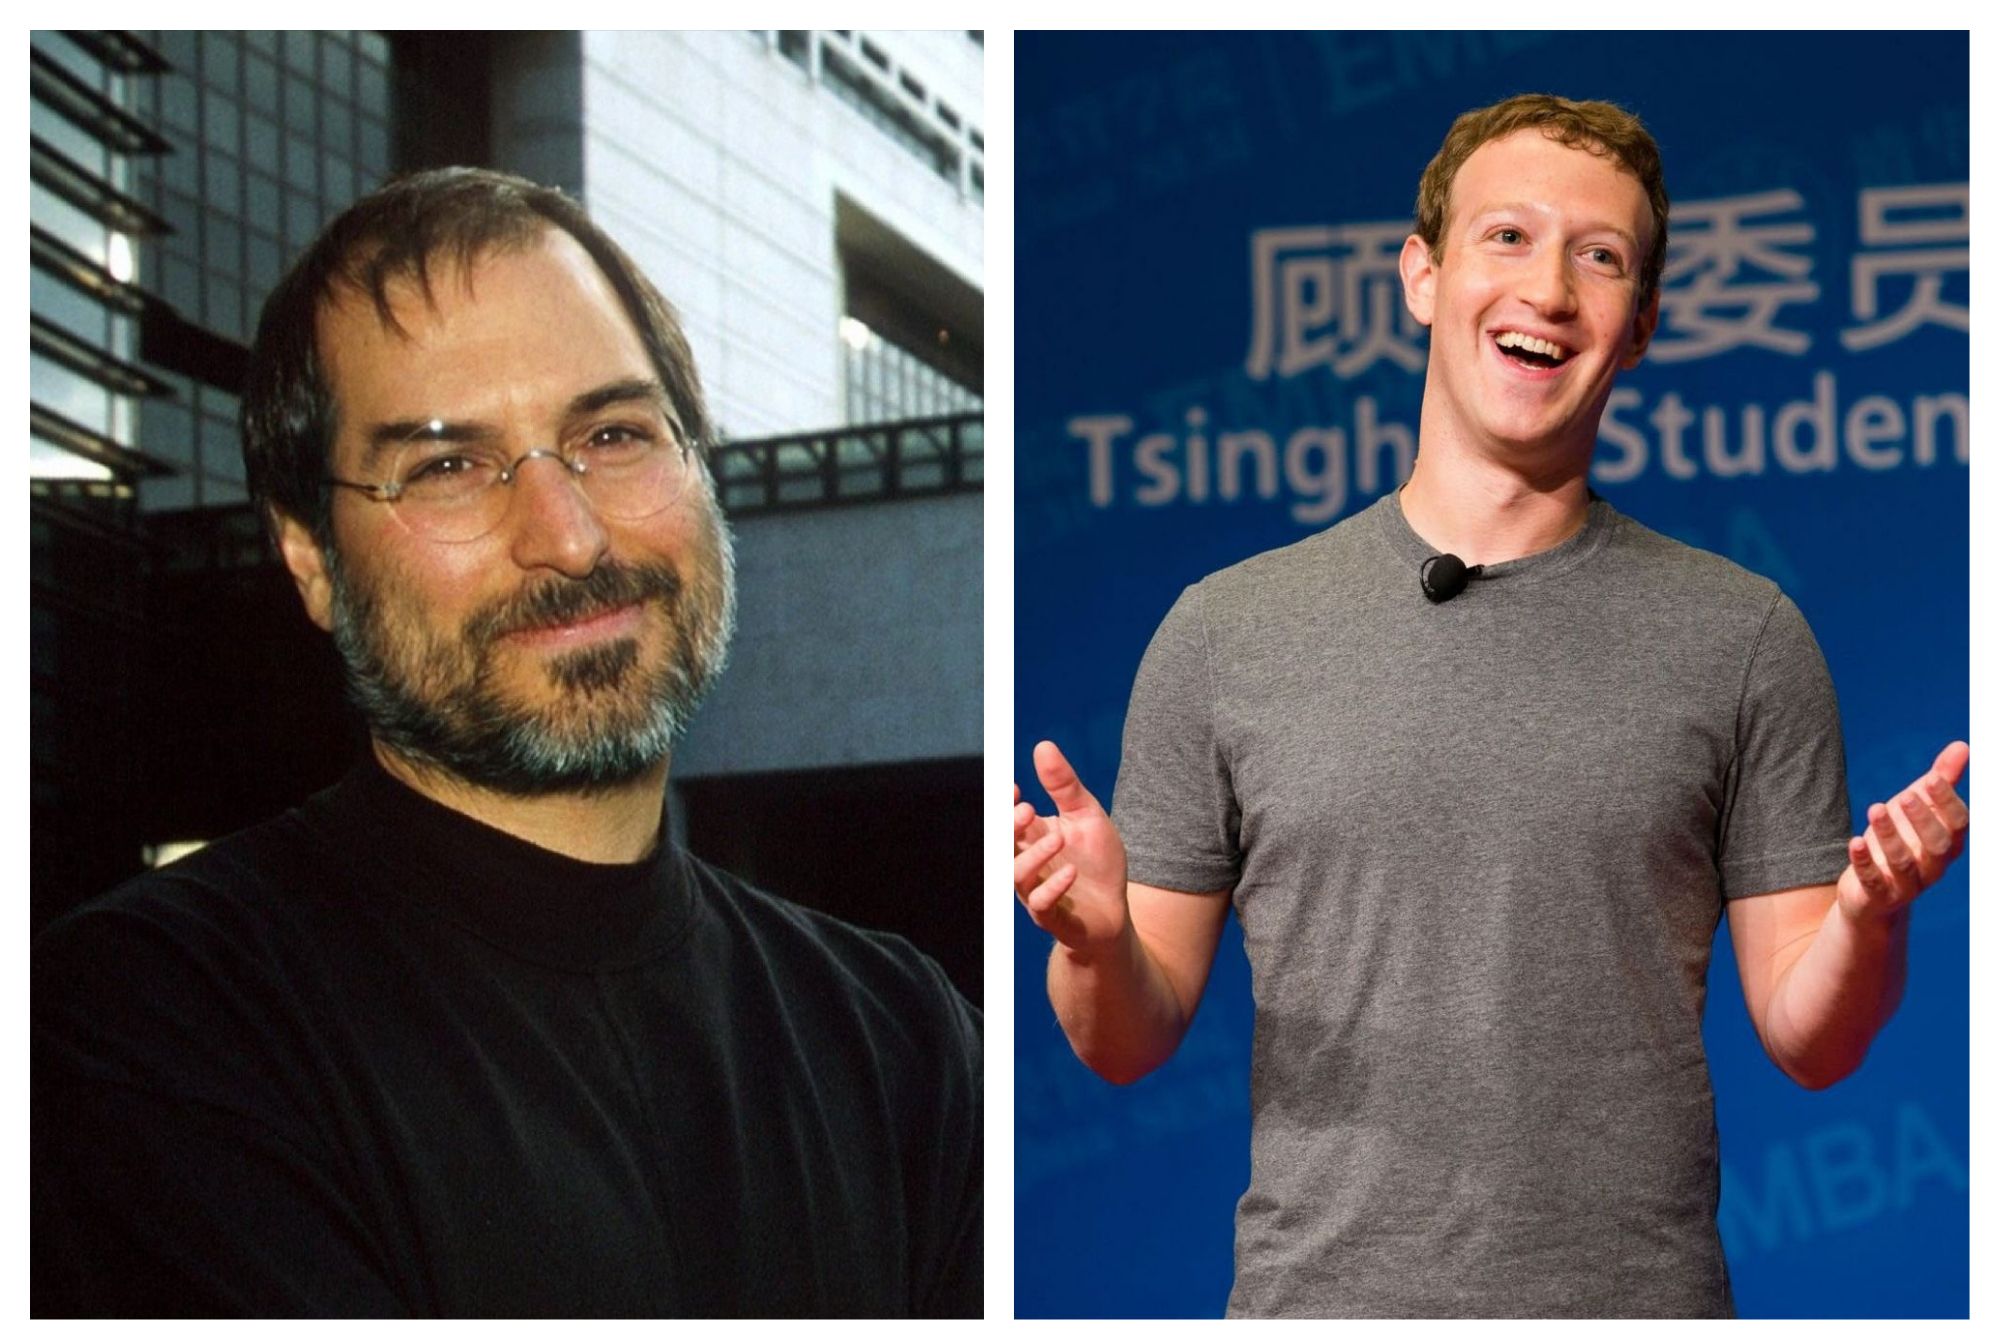 Quién muestra el mejor liderazgo: ¿Steve Jobs o Mark Zuckerberg?